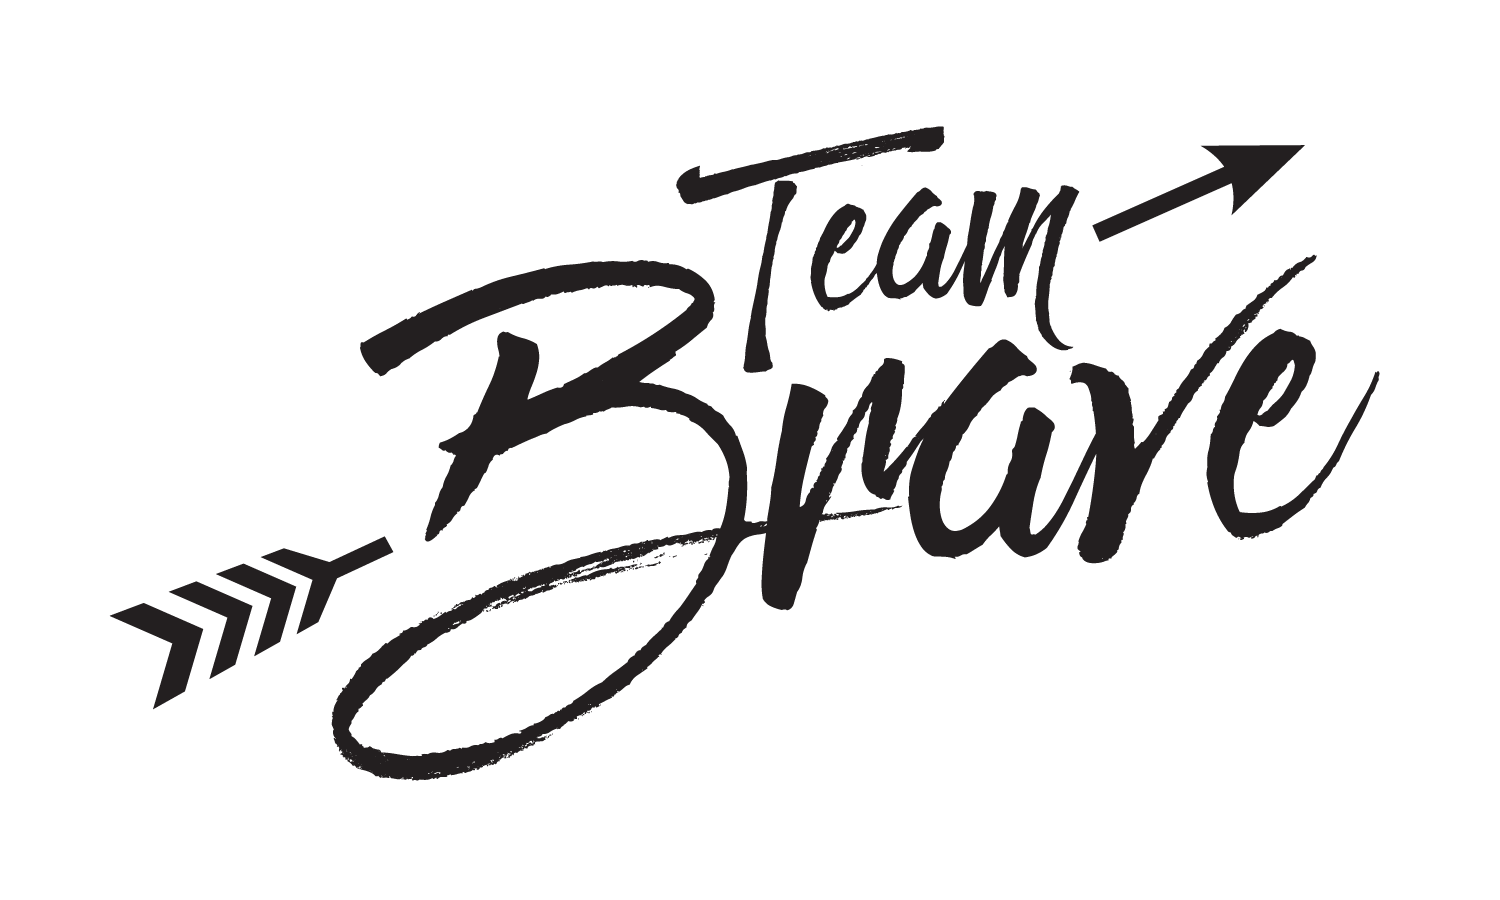 We Are Team Brave